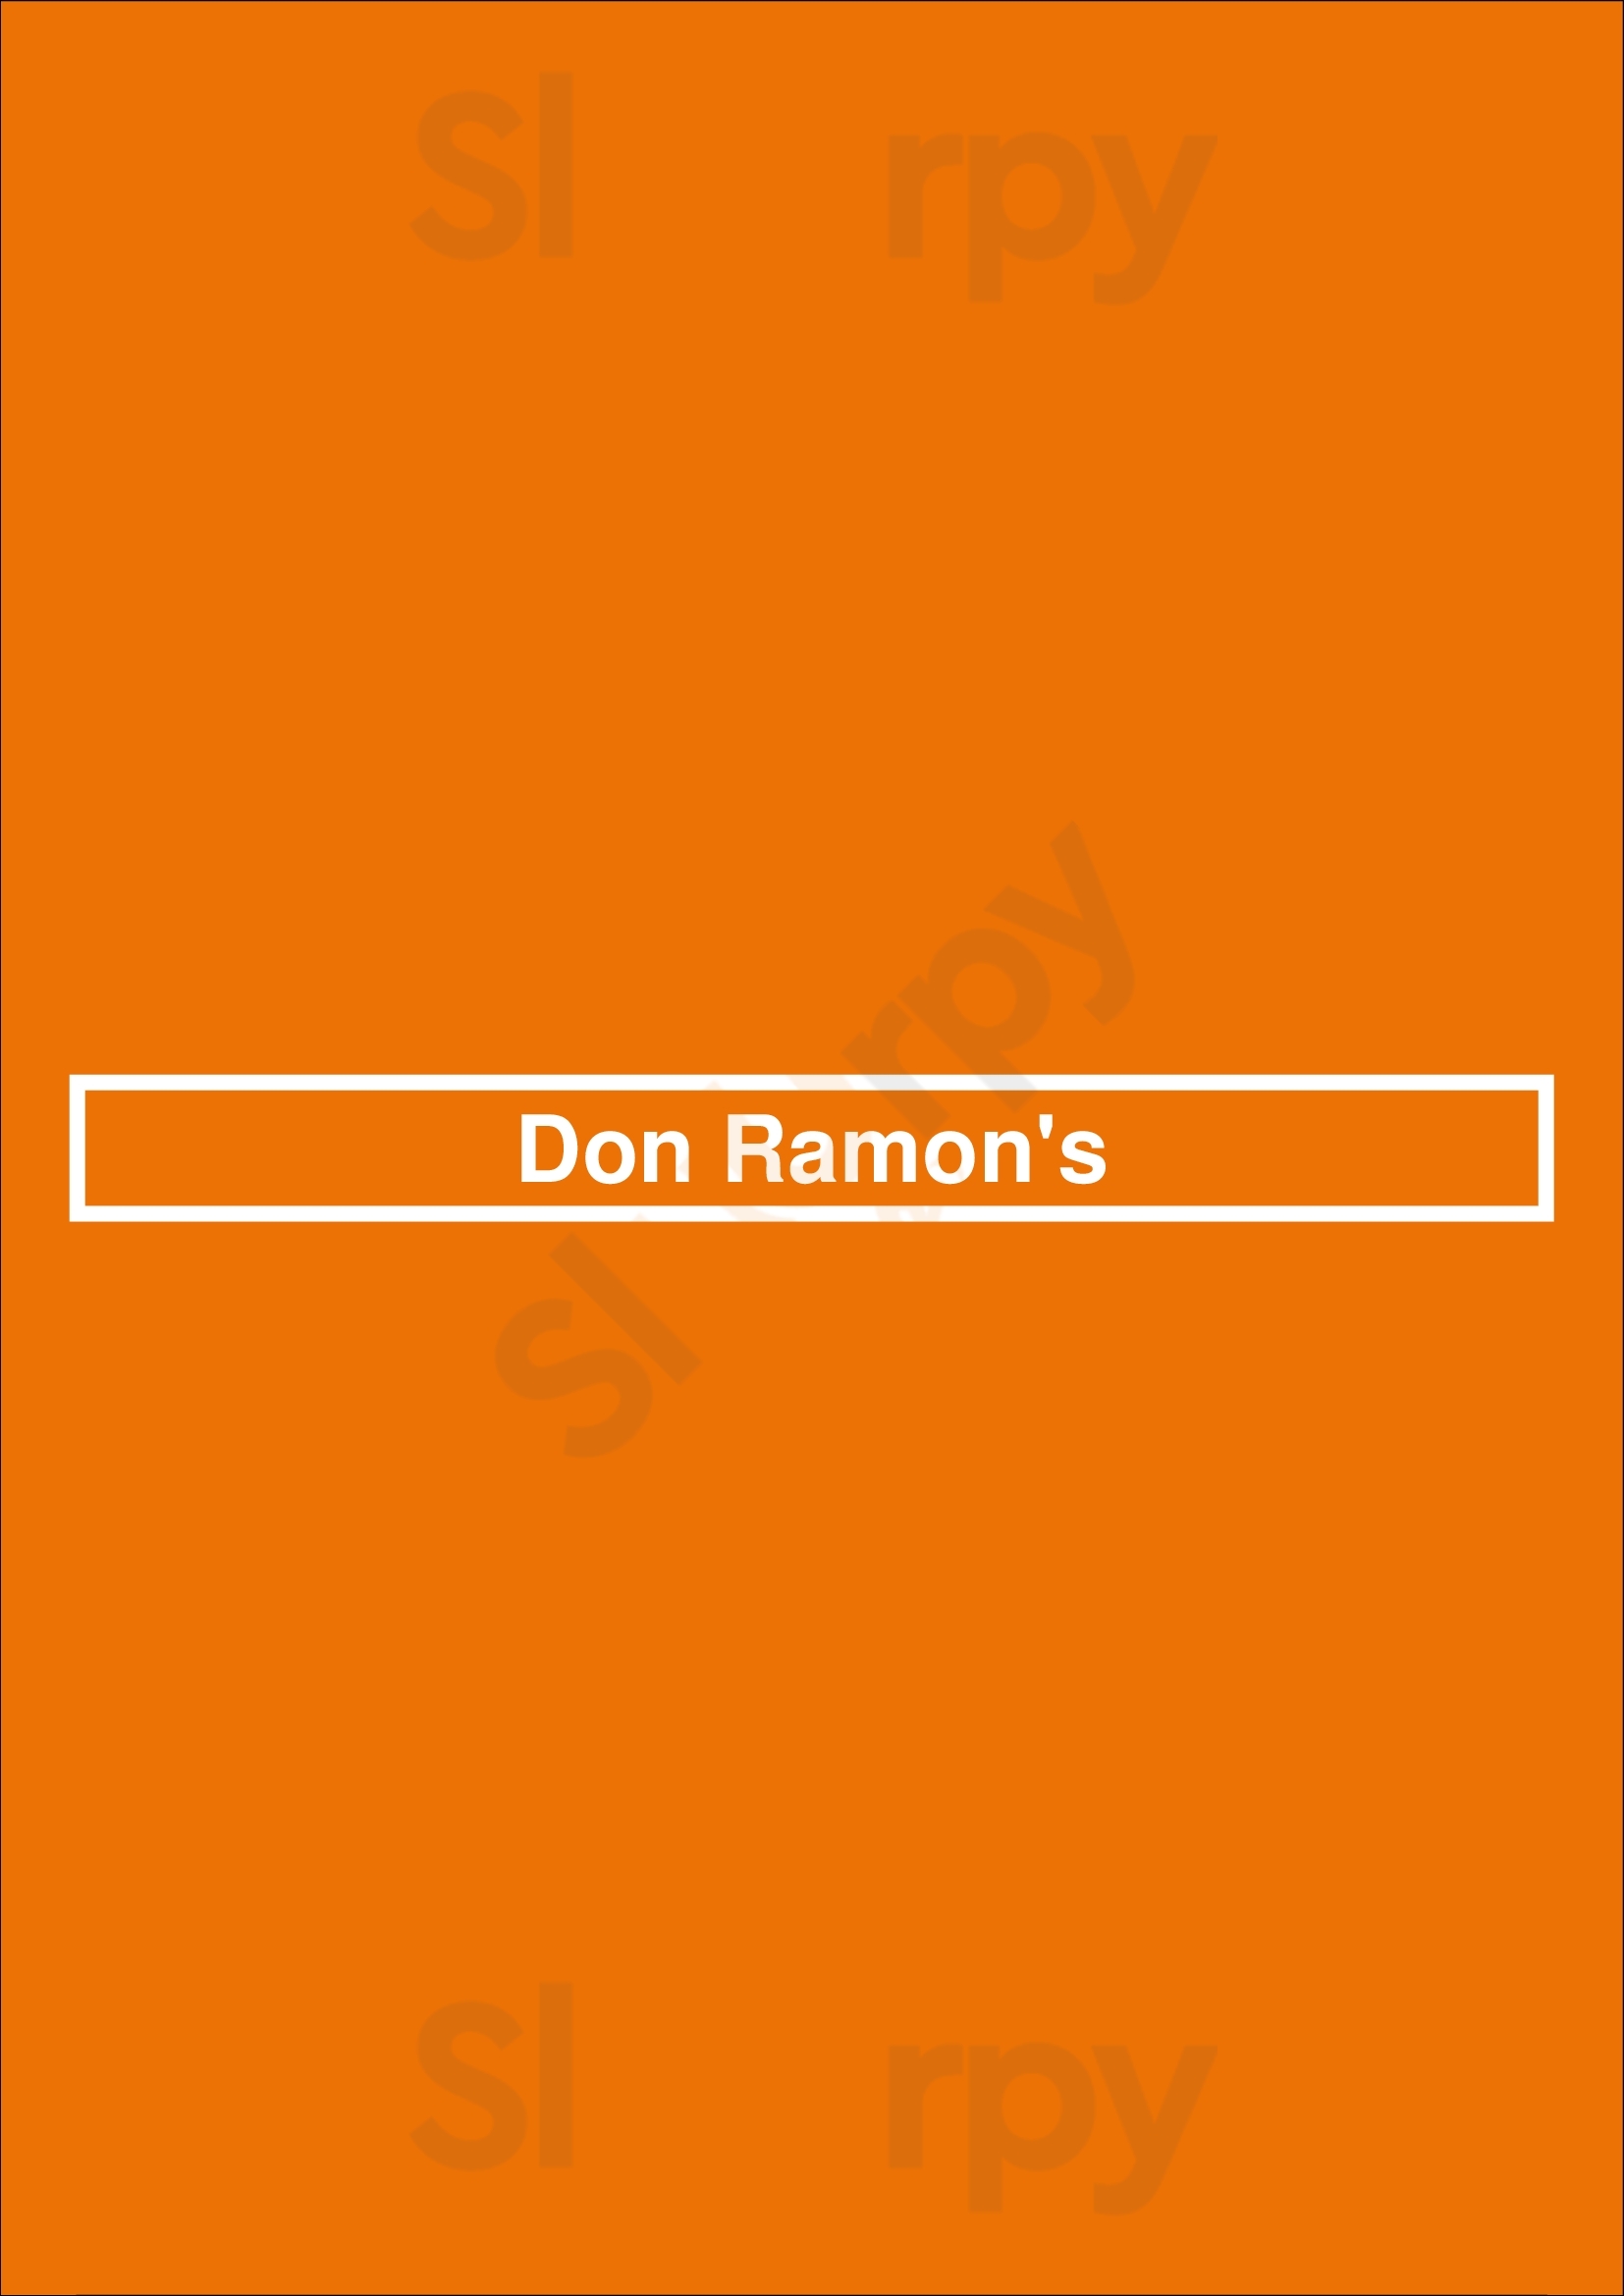 Don Ramon's Wellington Menu - 1